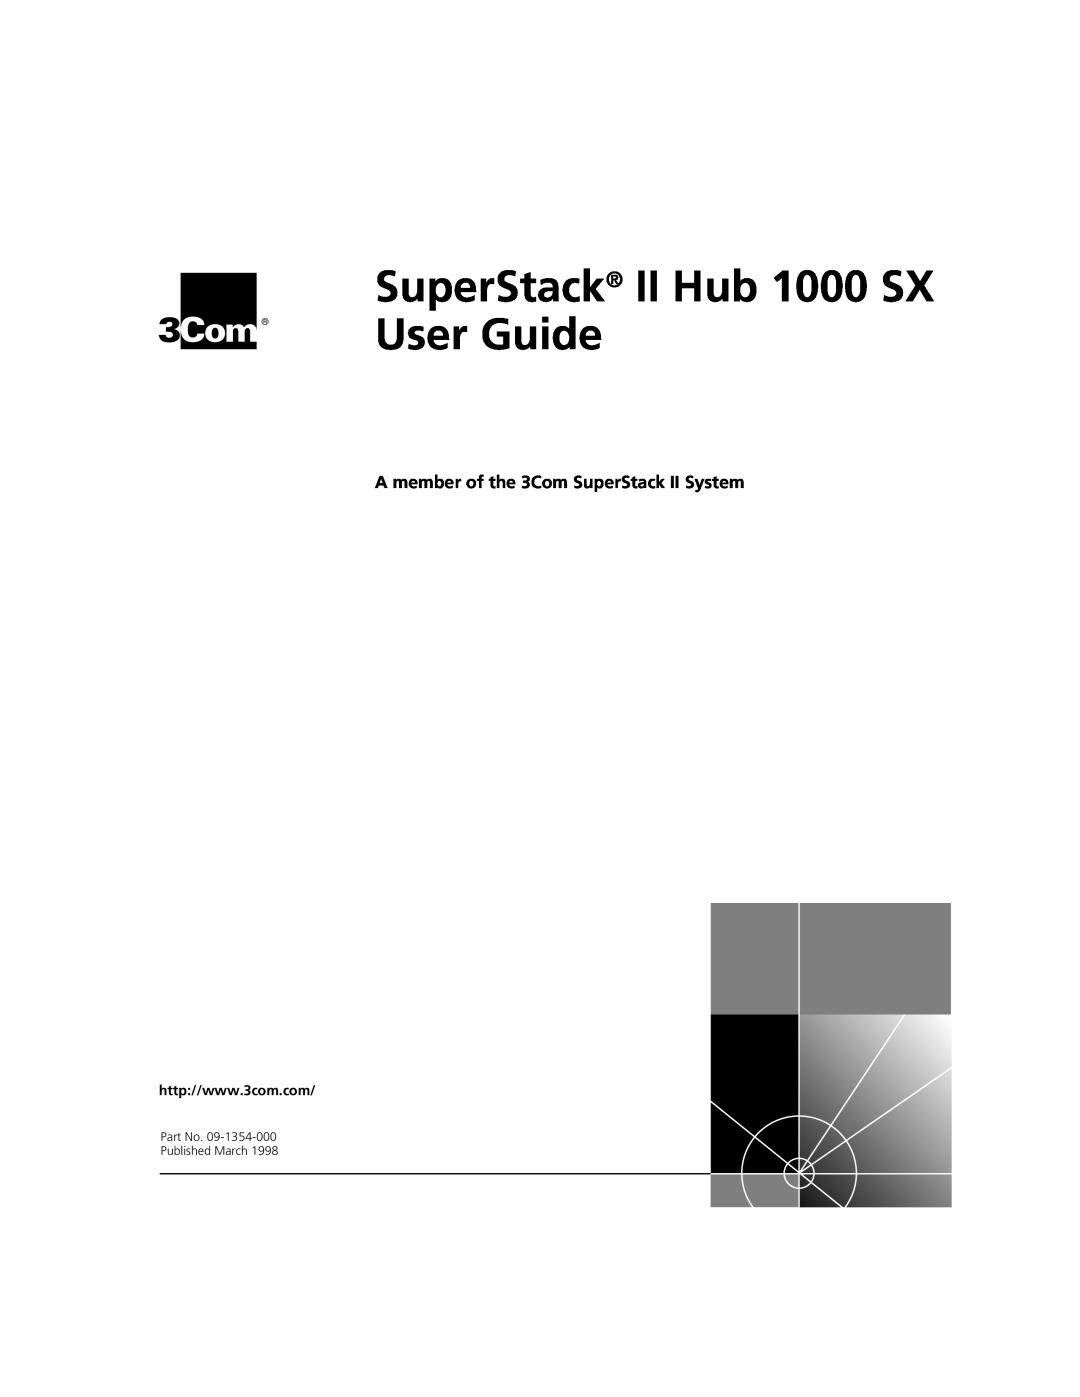 3Com manual SuperStack II Hub 1000 SX, User Guide, A member of the 3Com SuperStack II System 